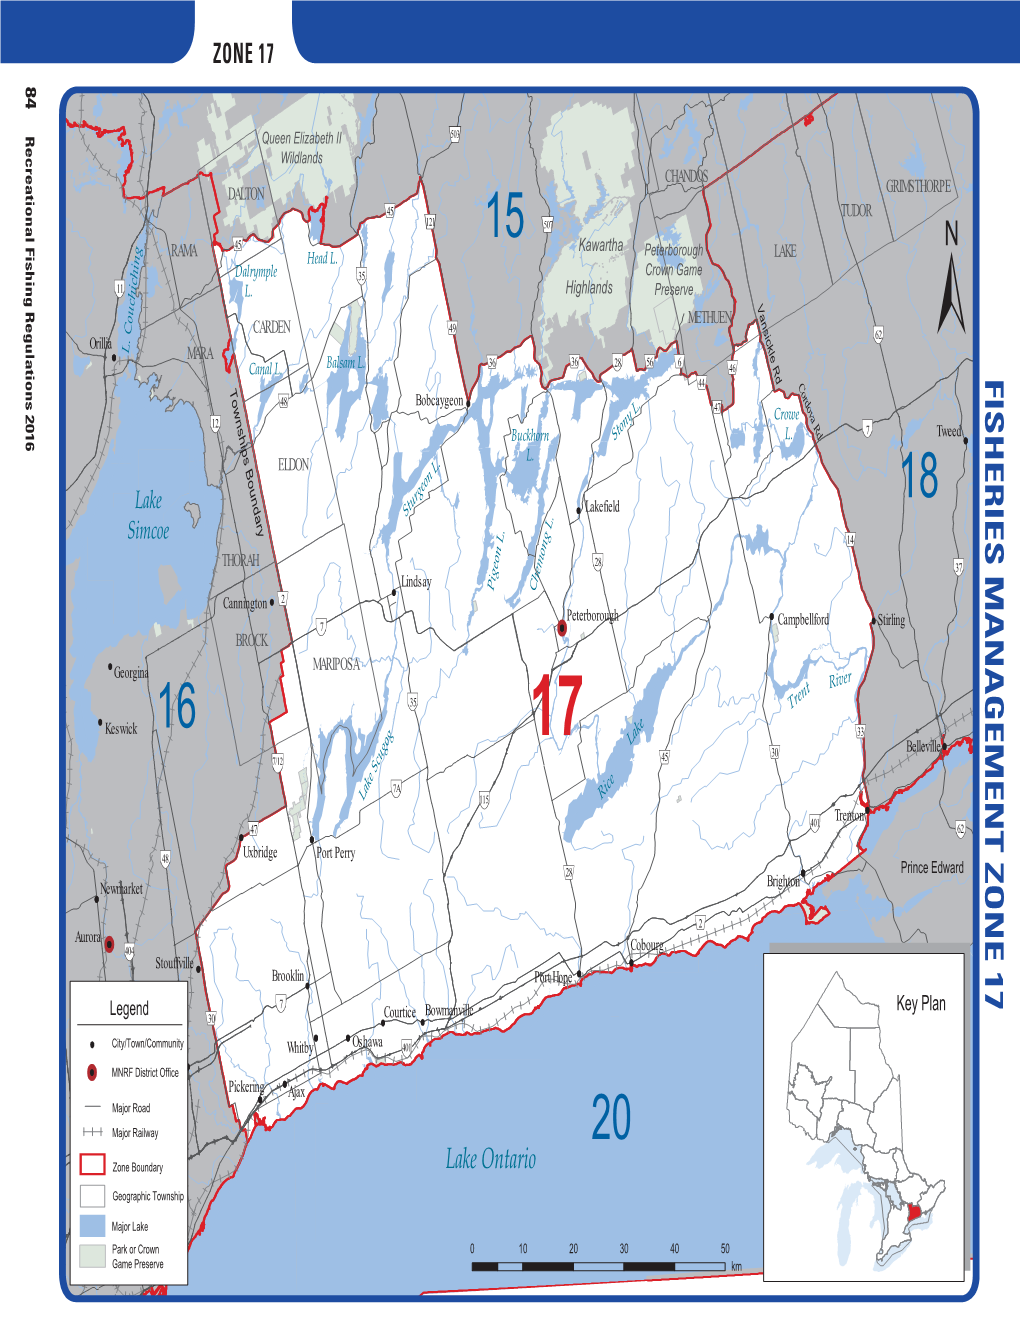 2016 Ontario Recreational Fishing Regulations Summary